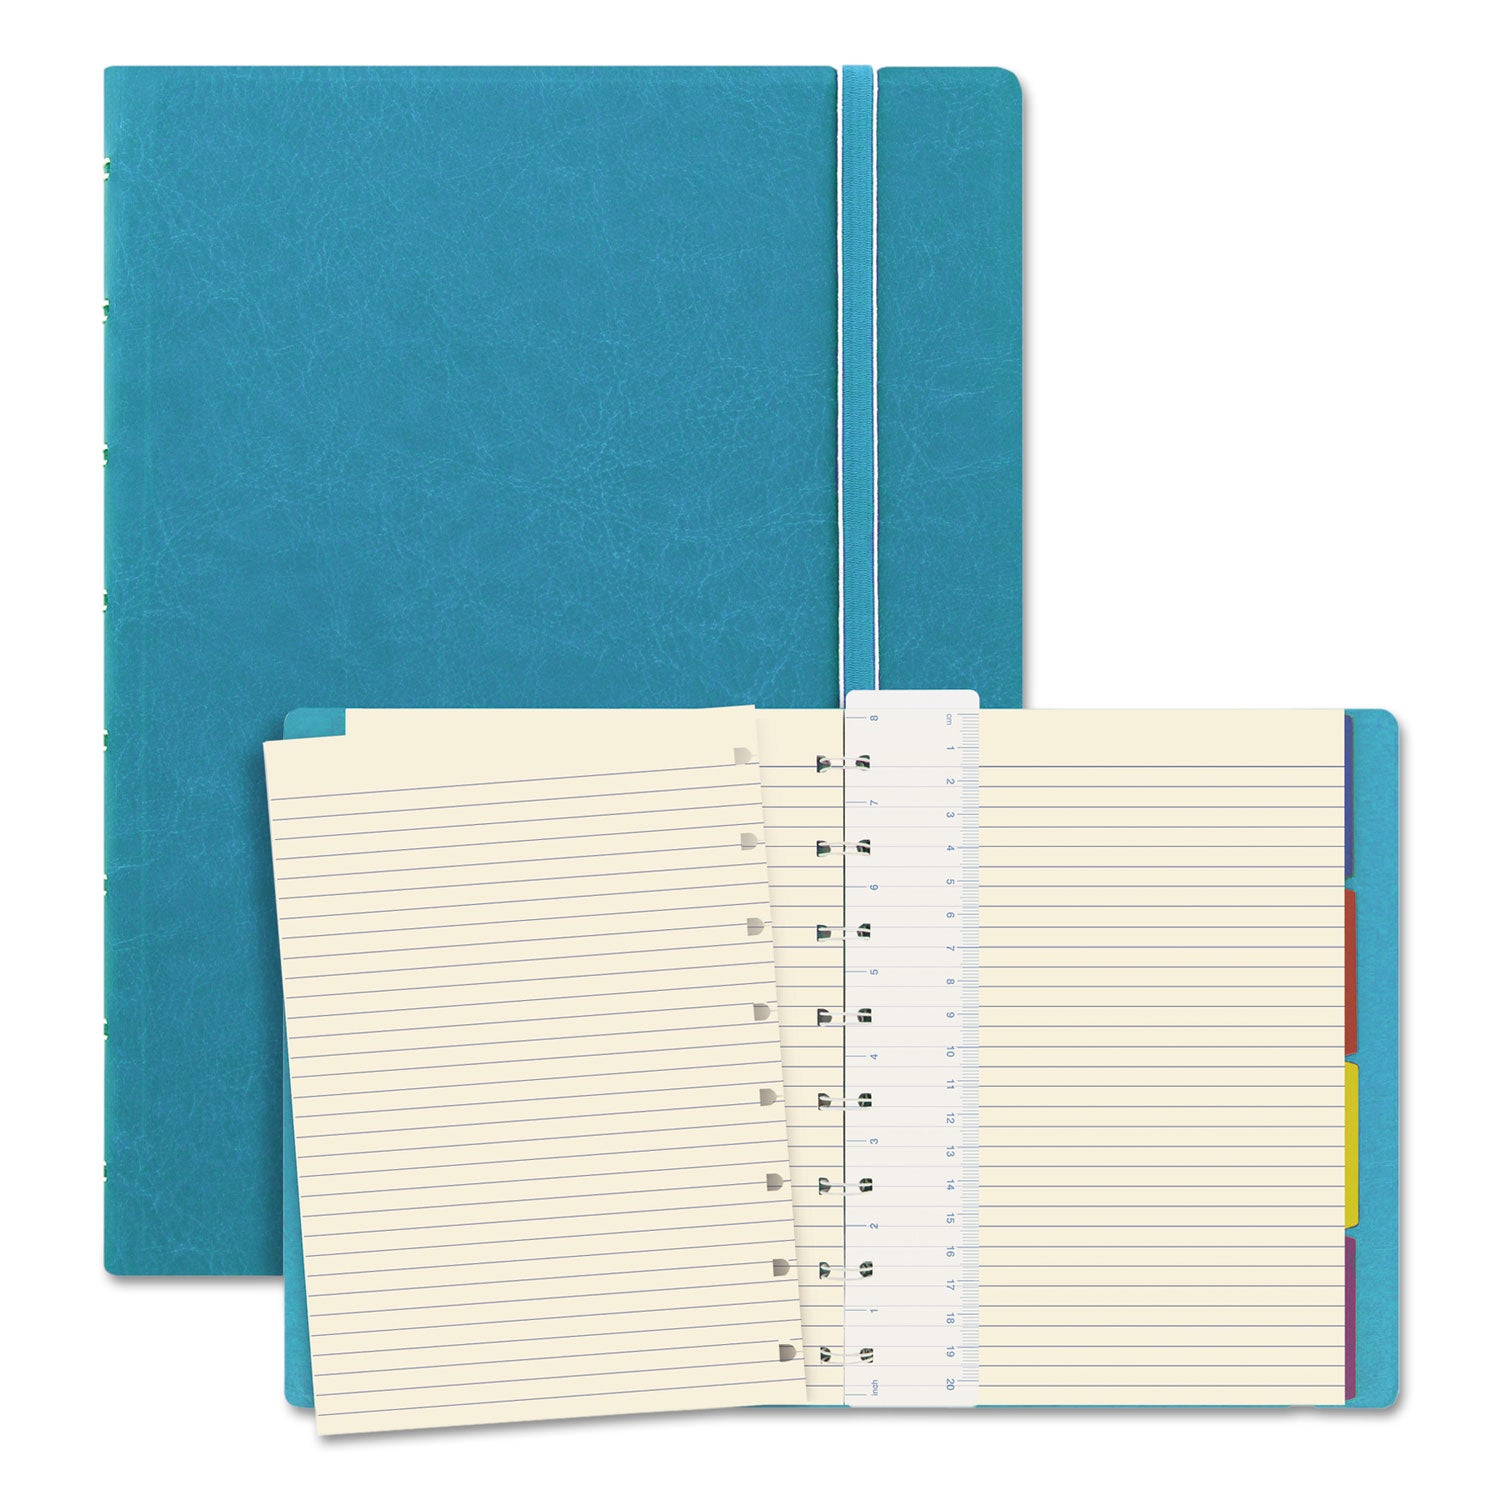 Notebook, 1-Subject, Medium/College Rule, Aqua Cover, (112) 8.25 x 5.81 Sheets - 